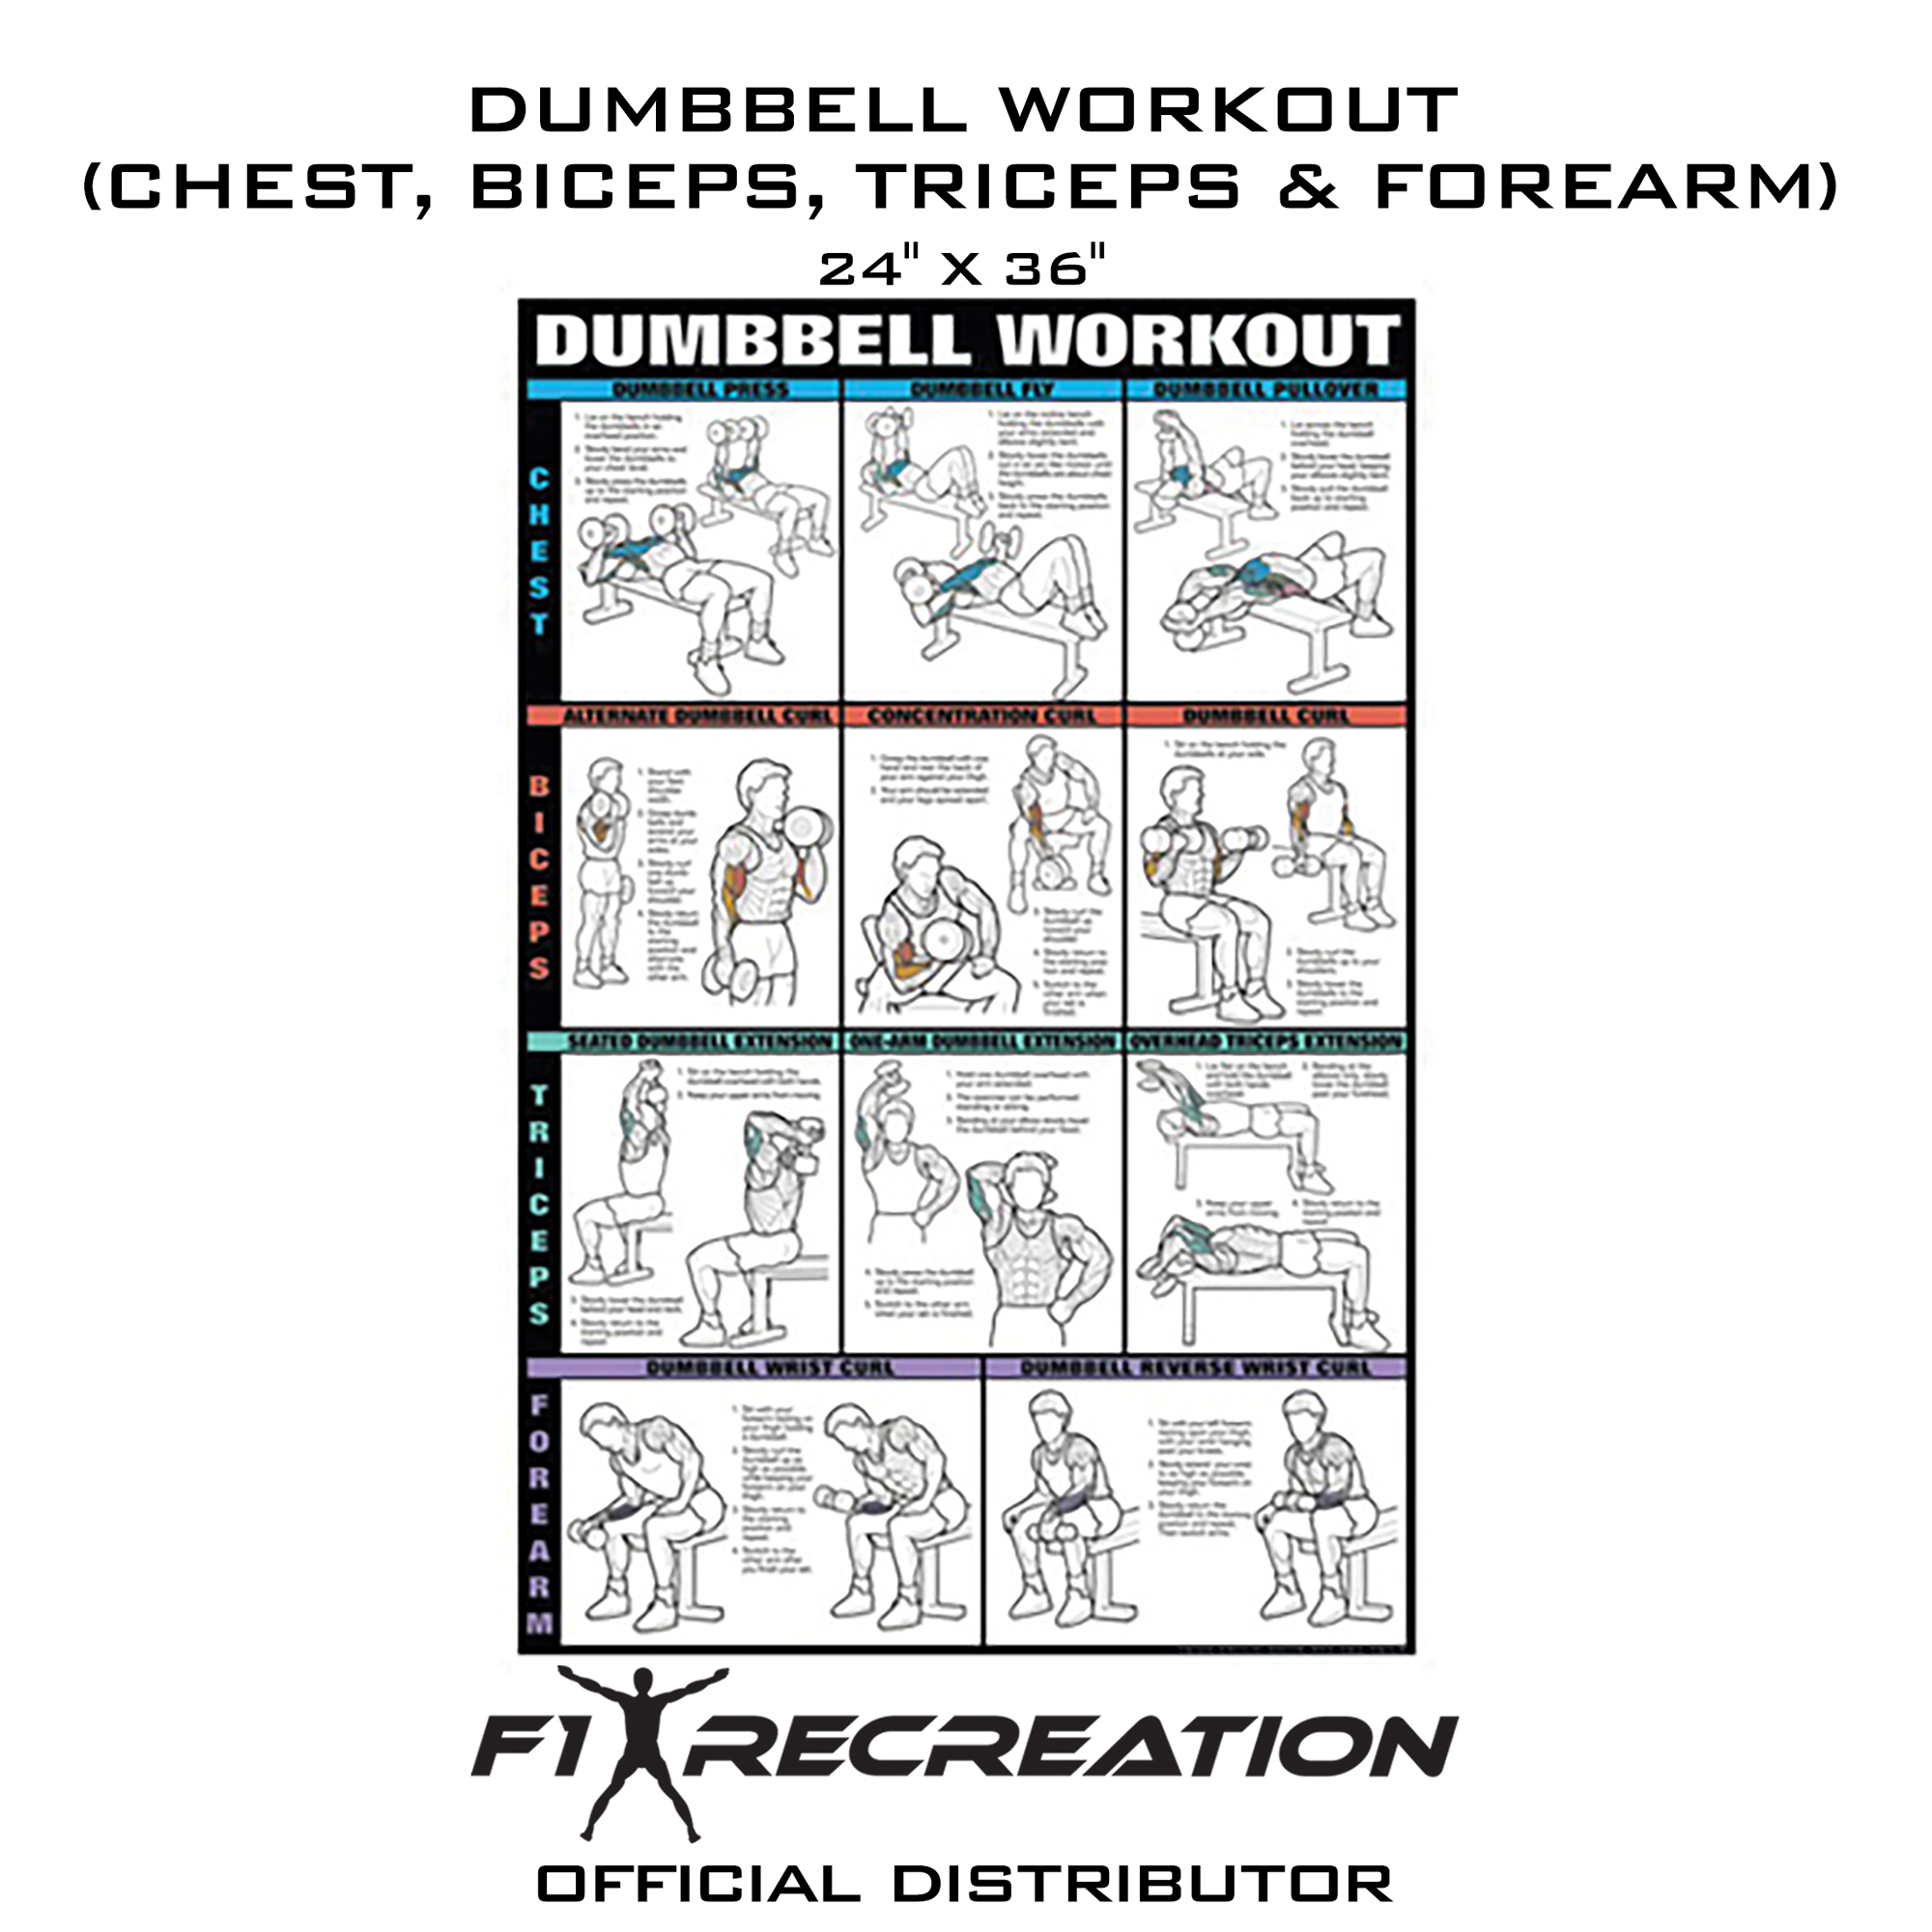 F1 Recreation Original Dumbbell Workout